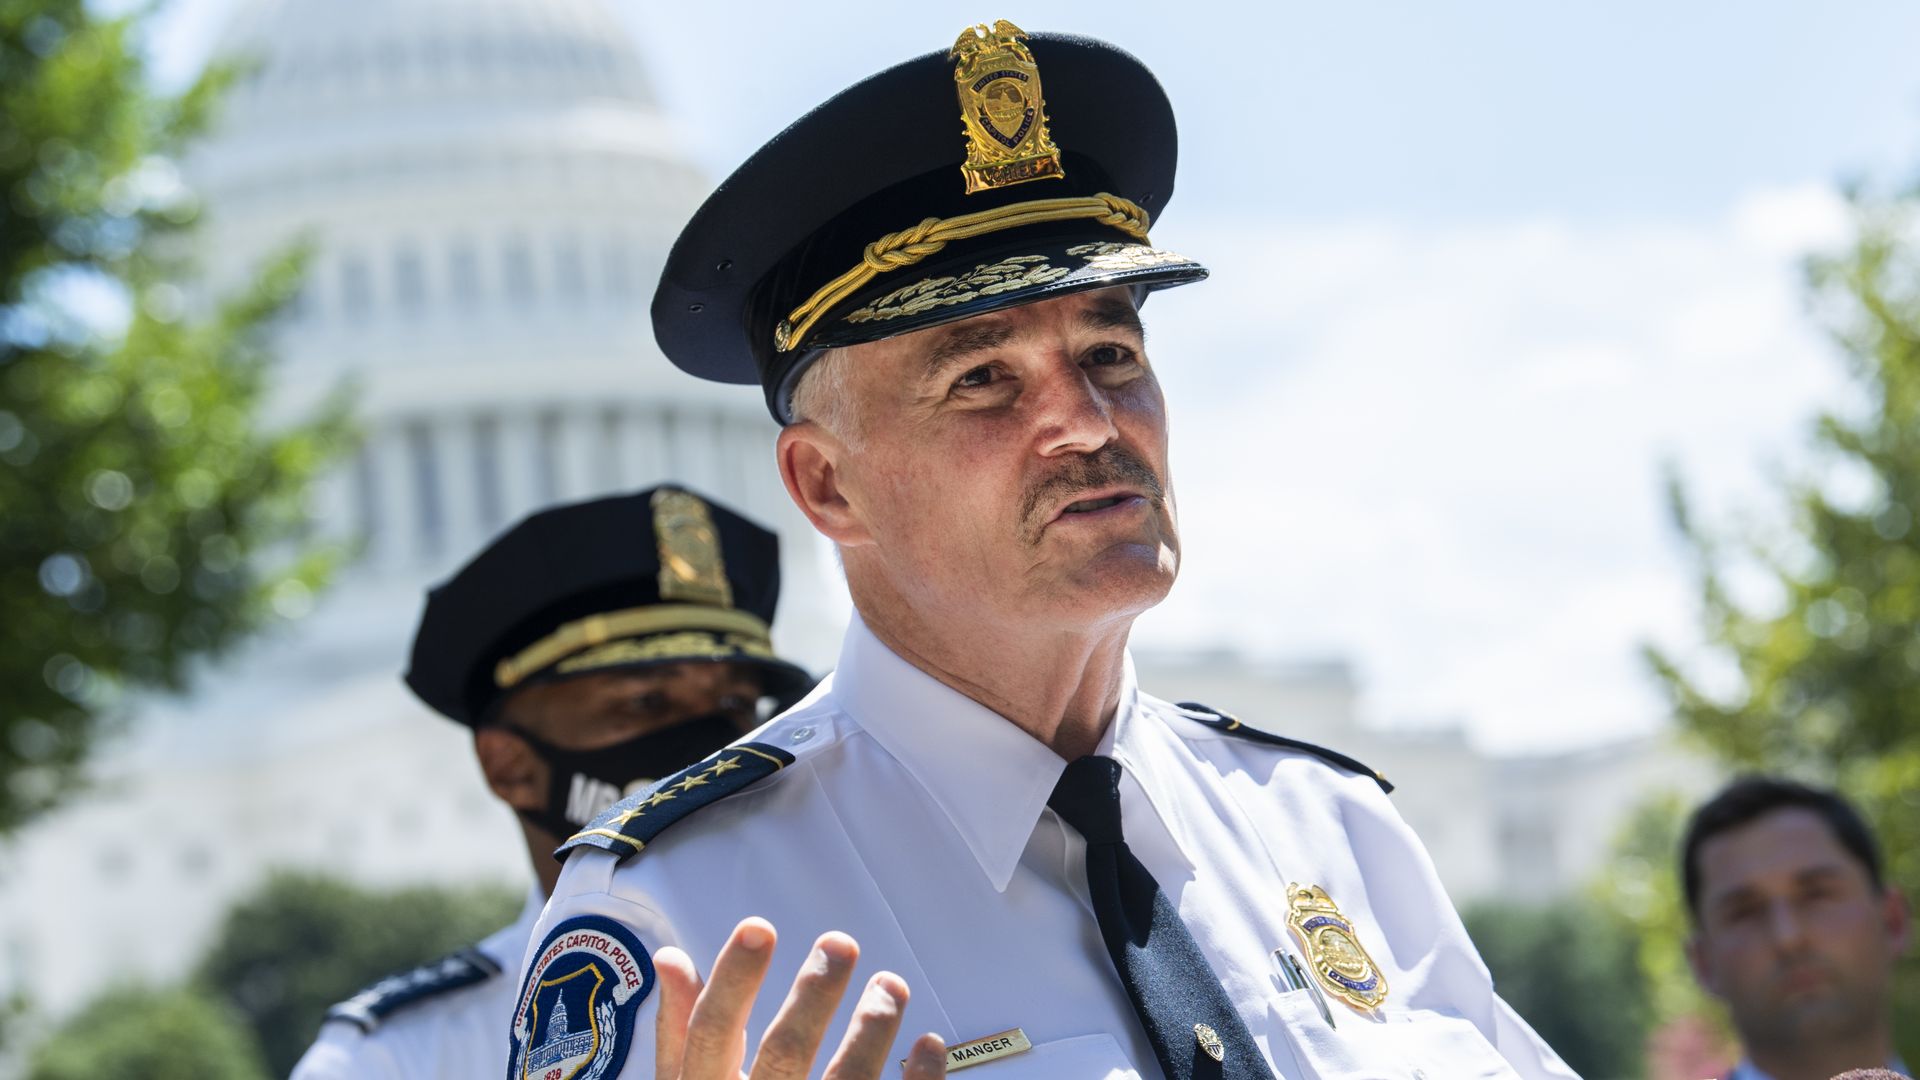 U.S. Capitol Police Chief J. Thomas Manger